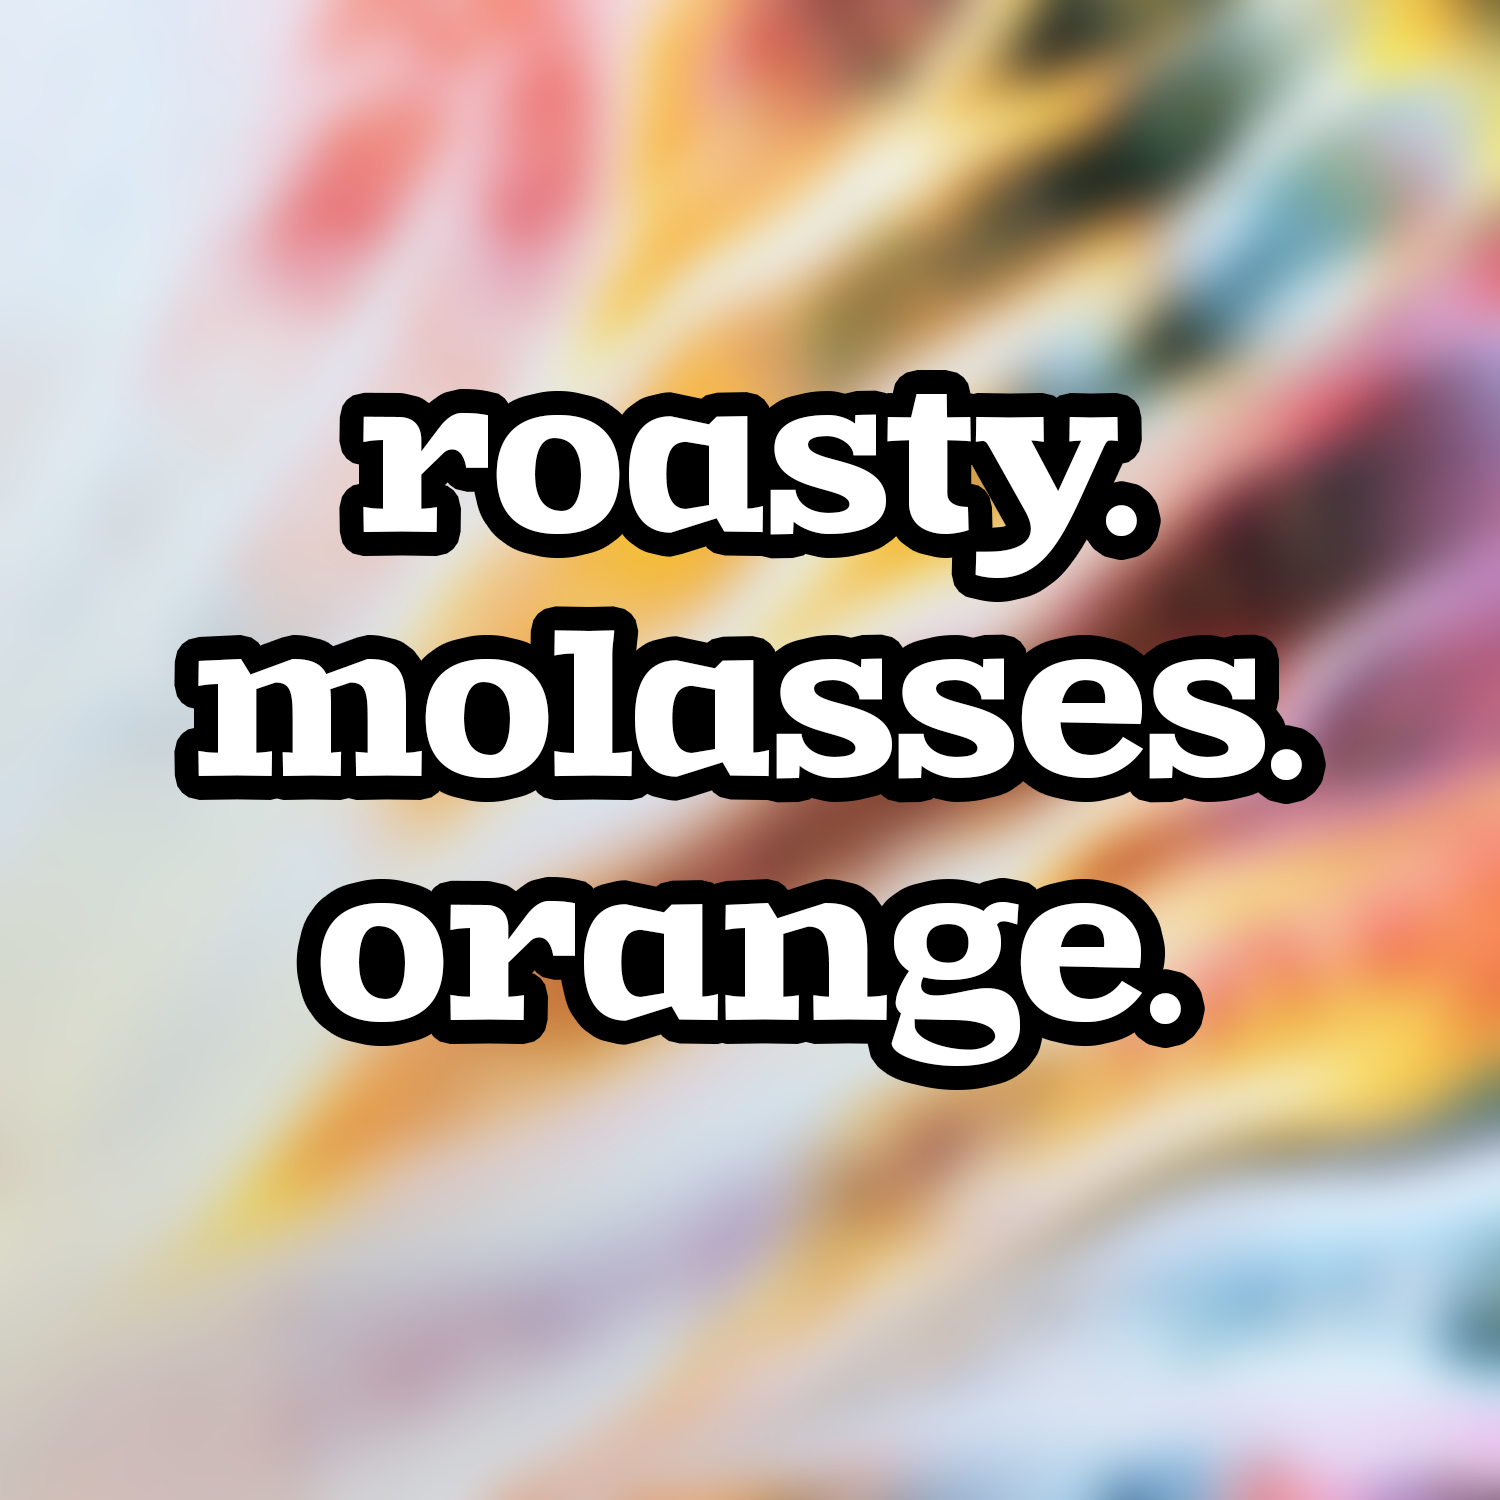 The tasting notes from Bizarre Coffee's Freakish dark roast coffee. Roasty, molasses, orange. 